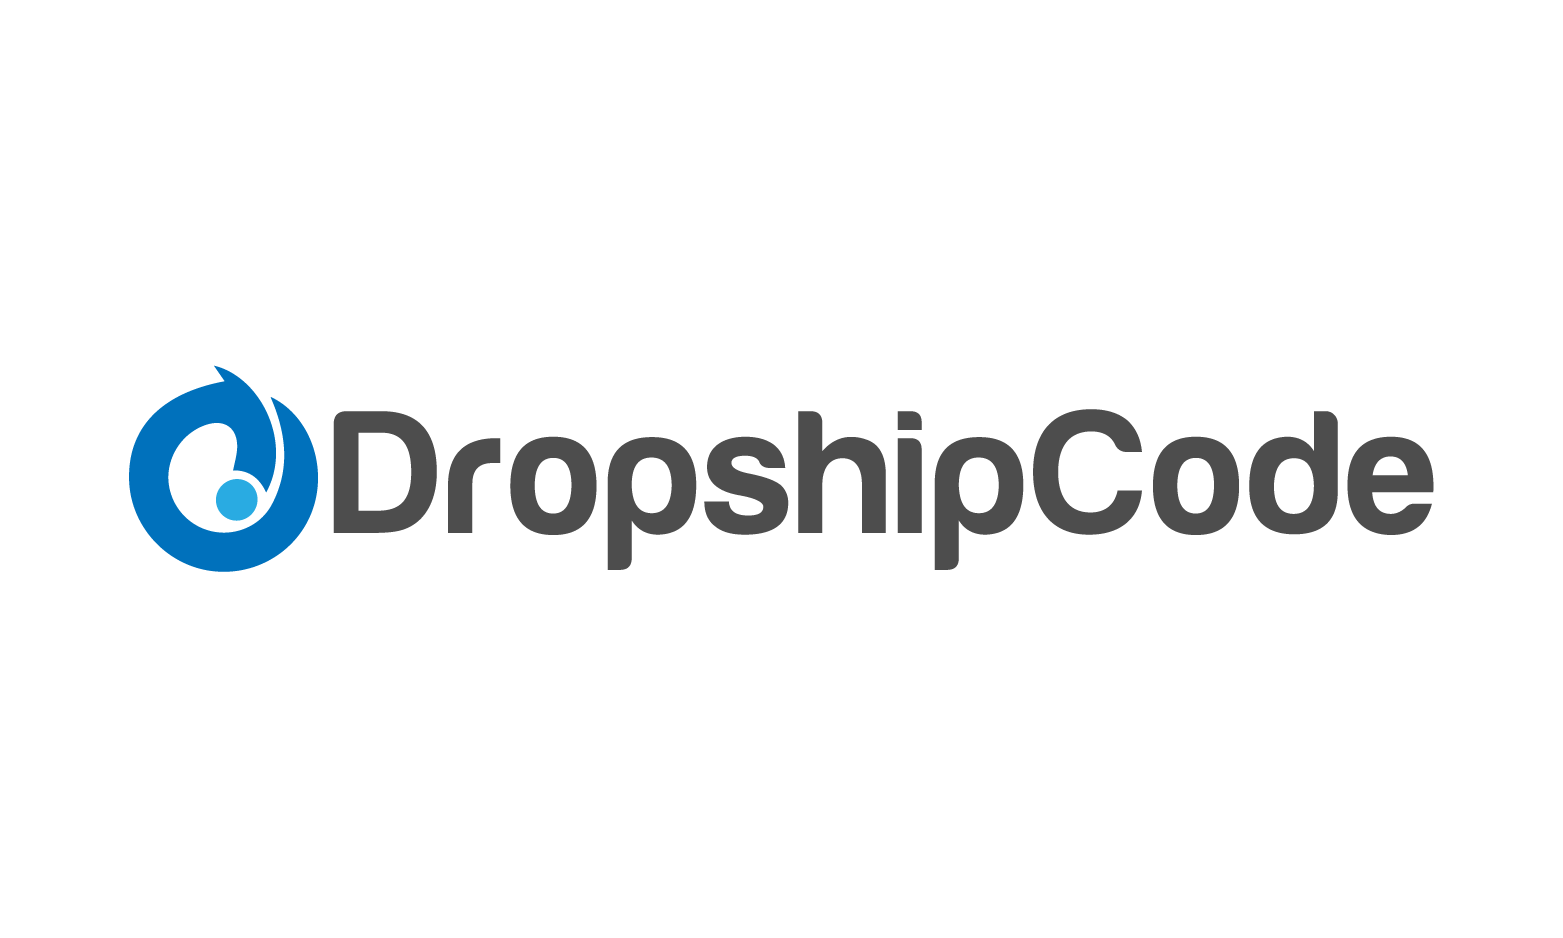 The DropShip Code